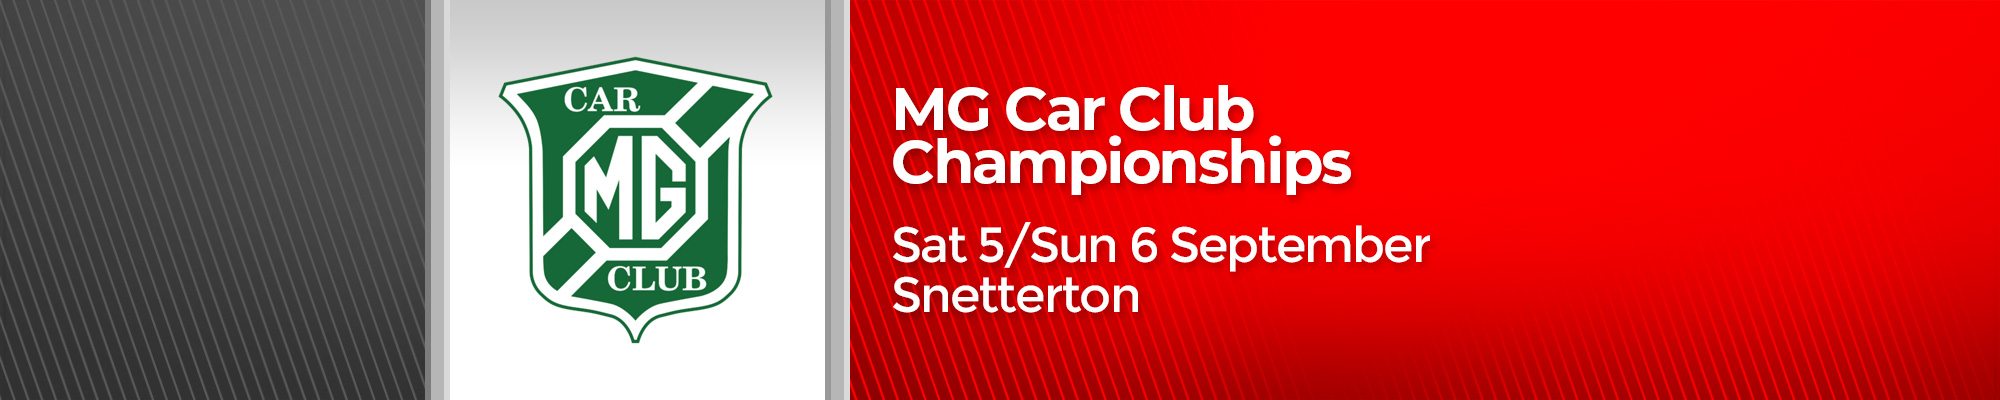 MG Car Club Championships